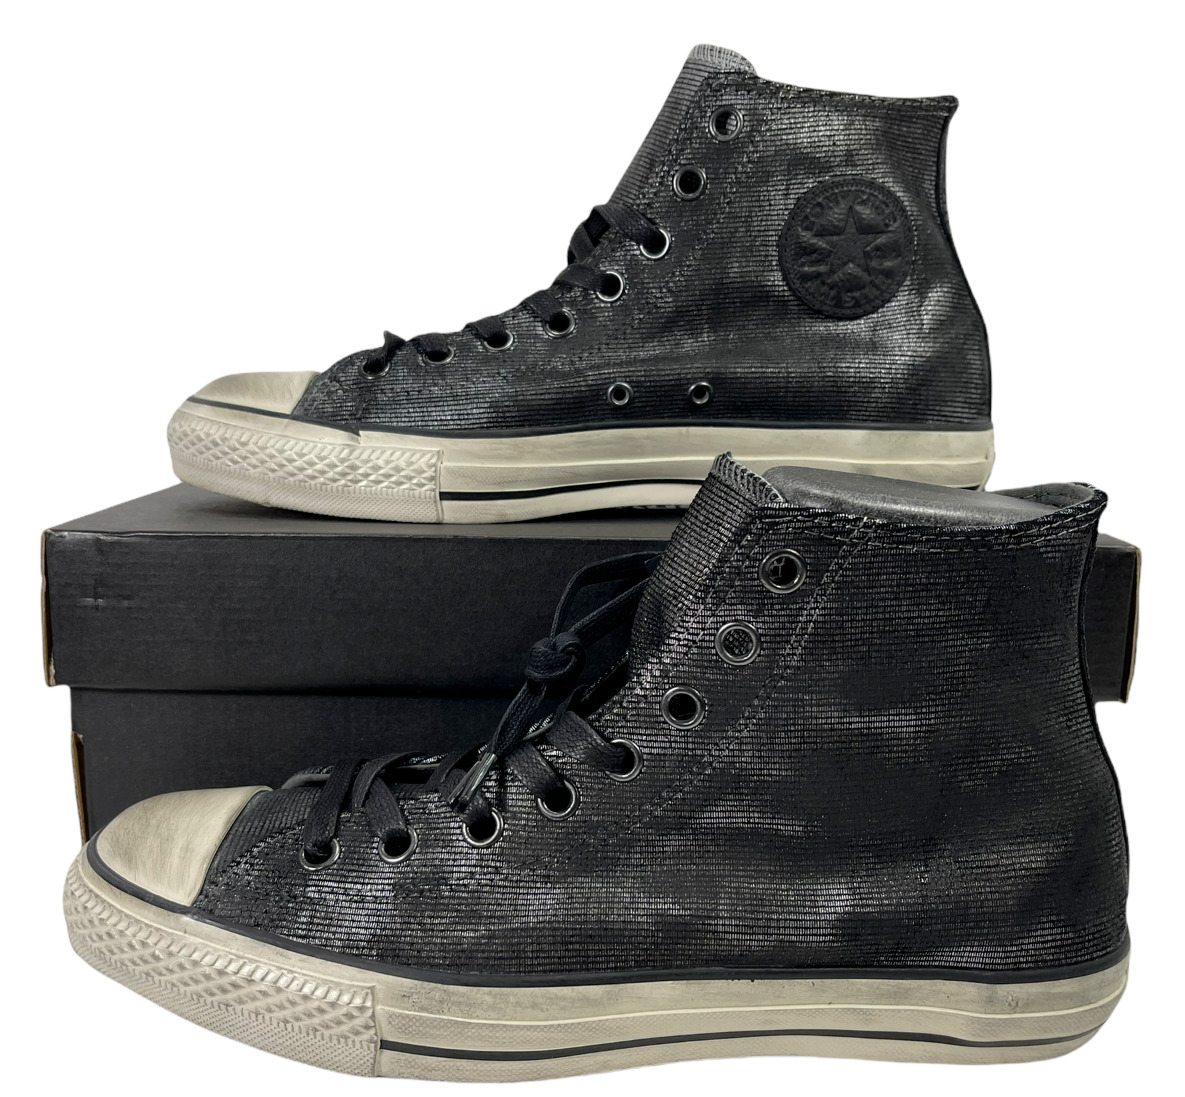 Converse John Varvatos JV Chuck Taylor All Star Sneaker Black Silver 150175C